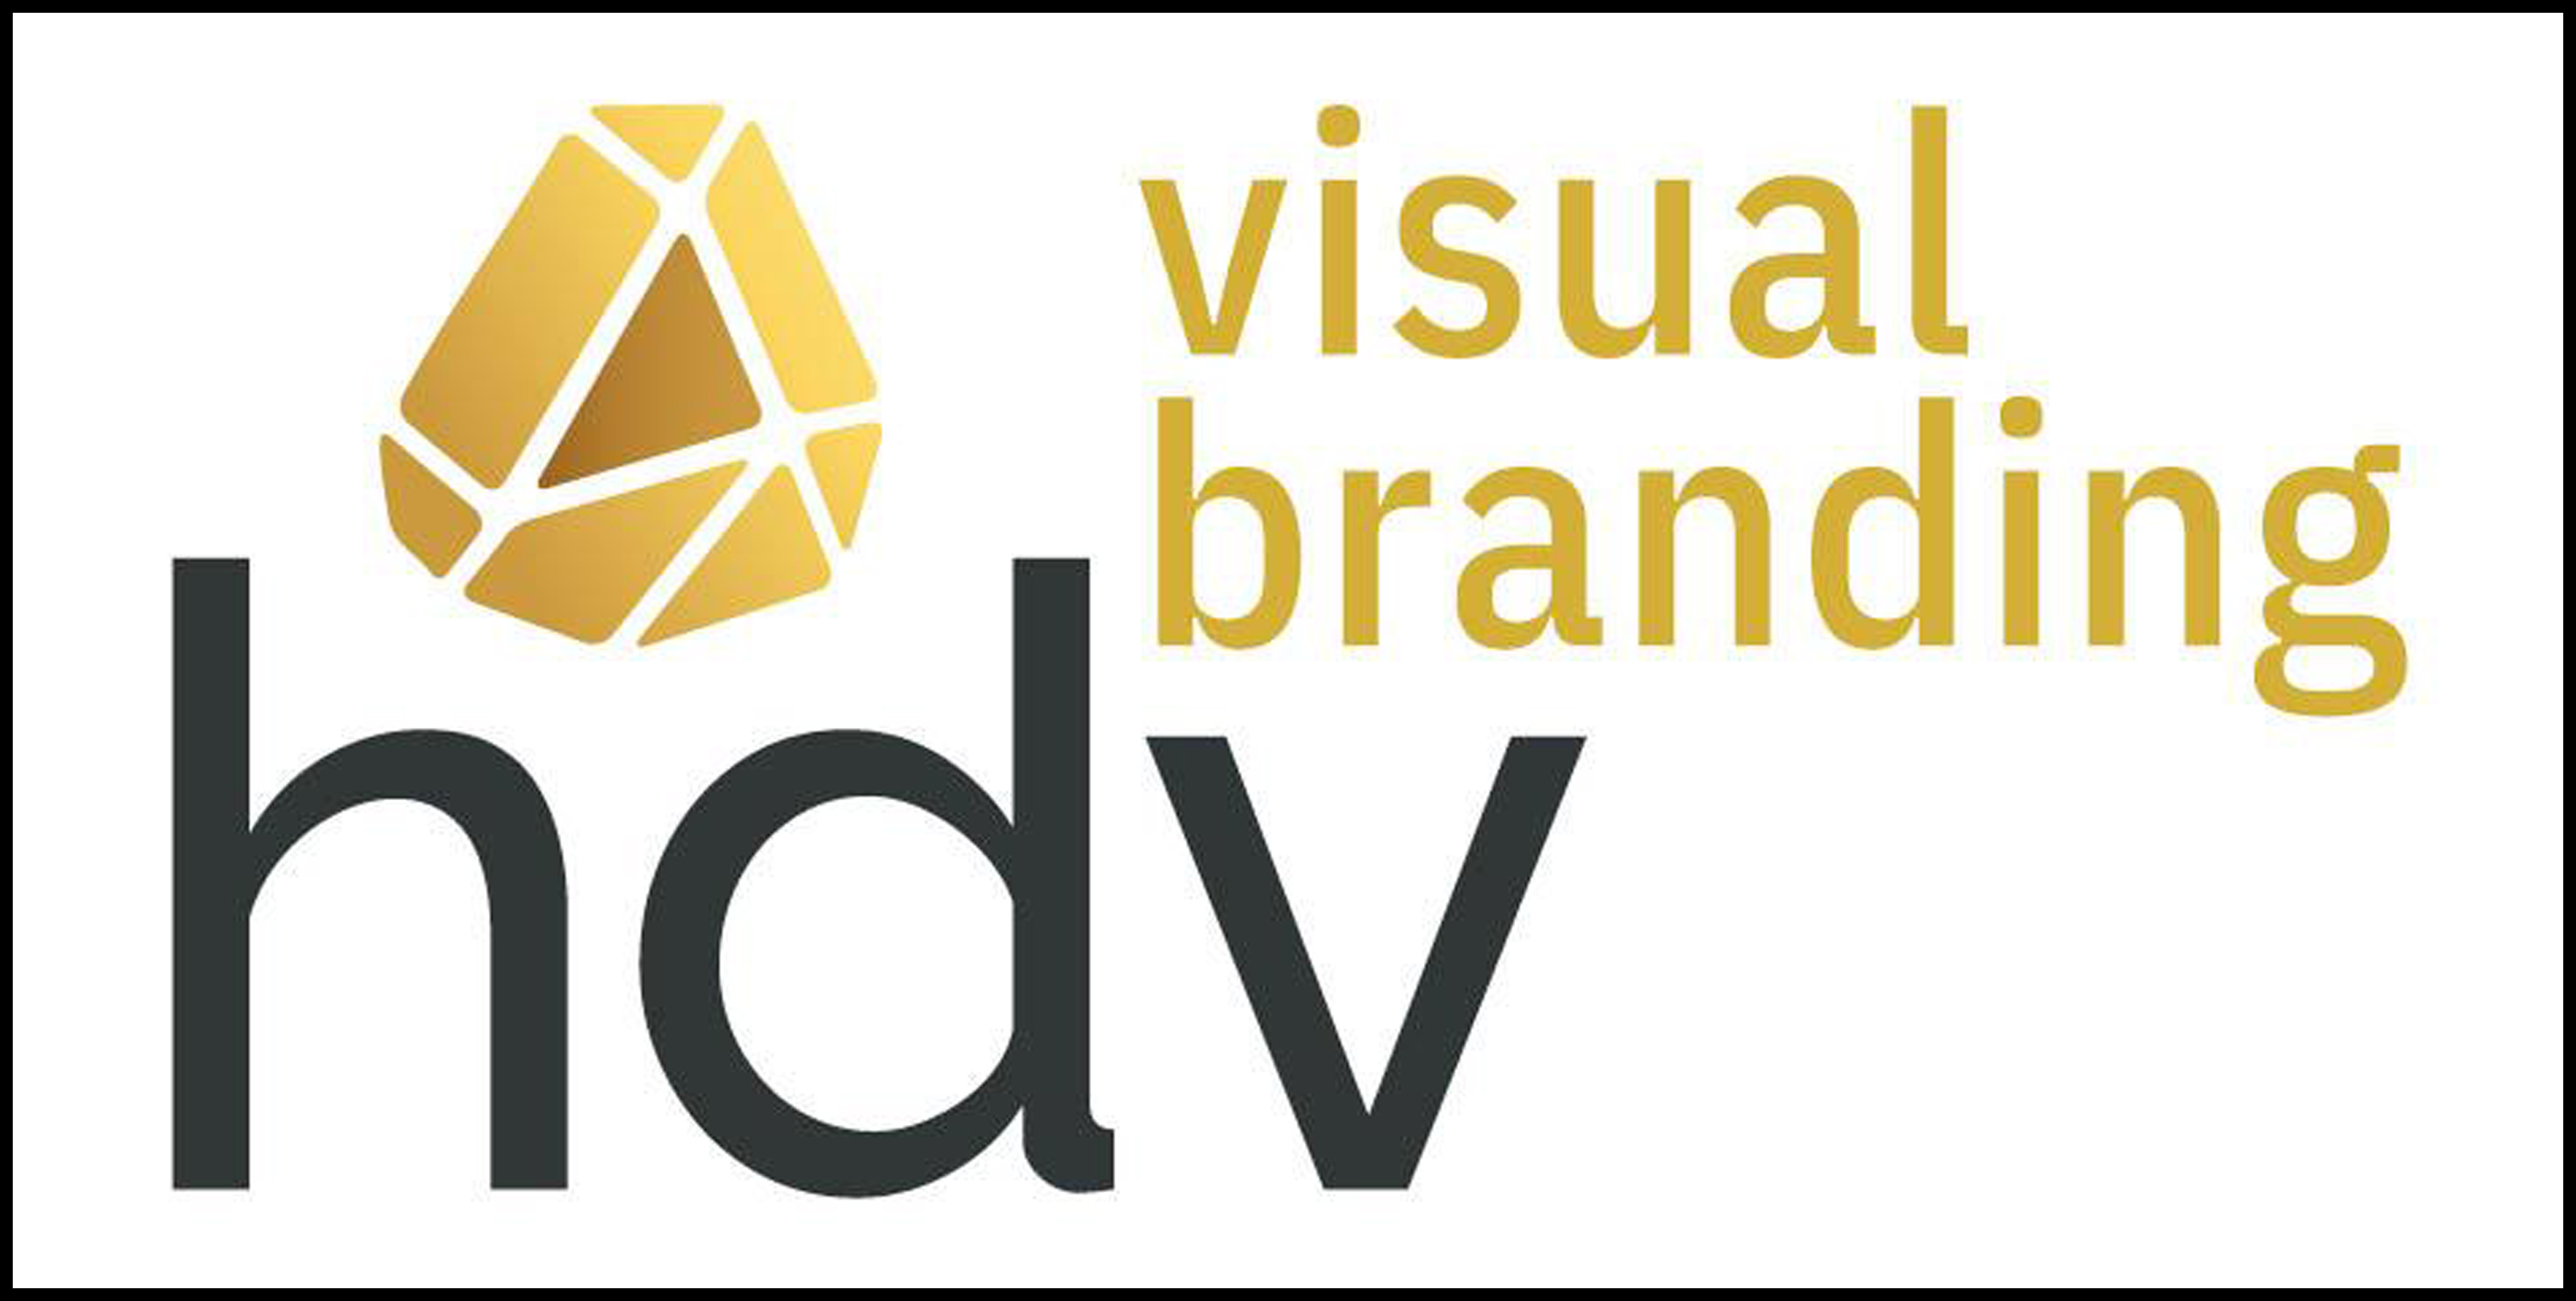 nen3140.net hdv visual branding amsterdam